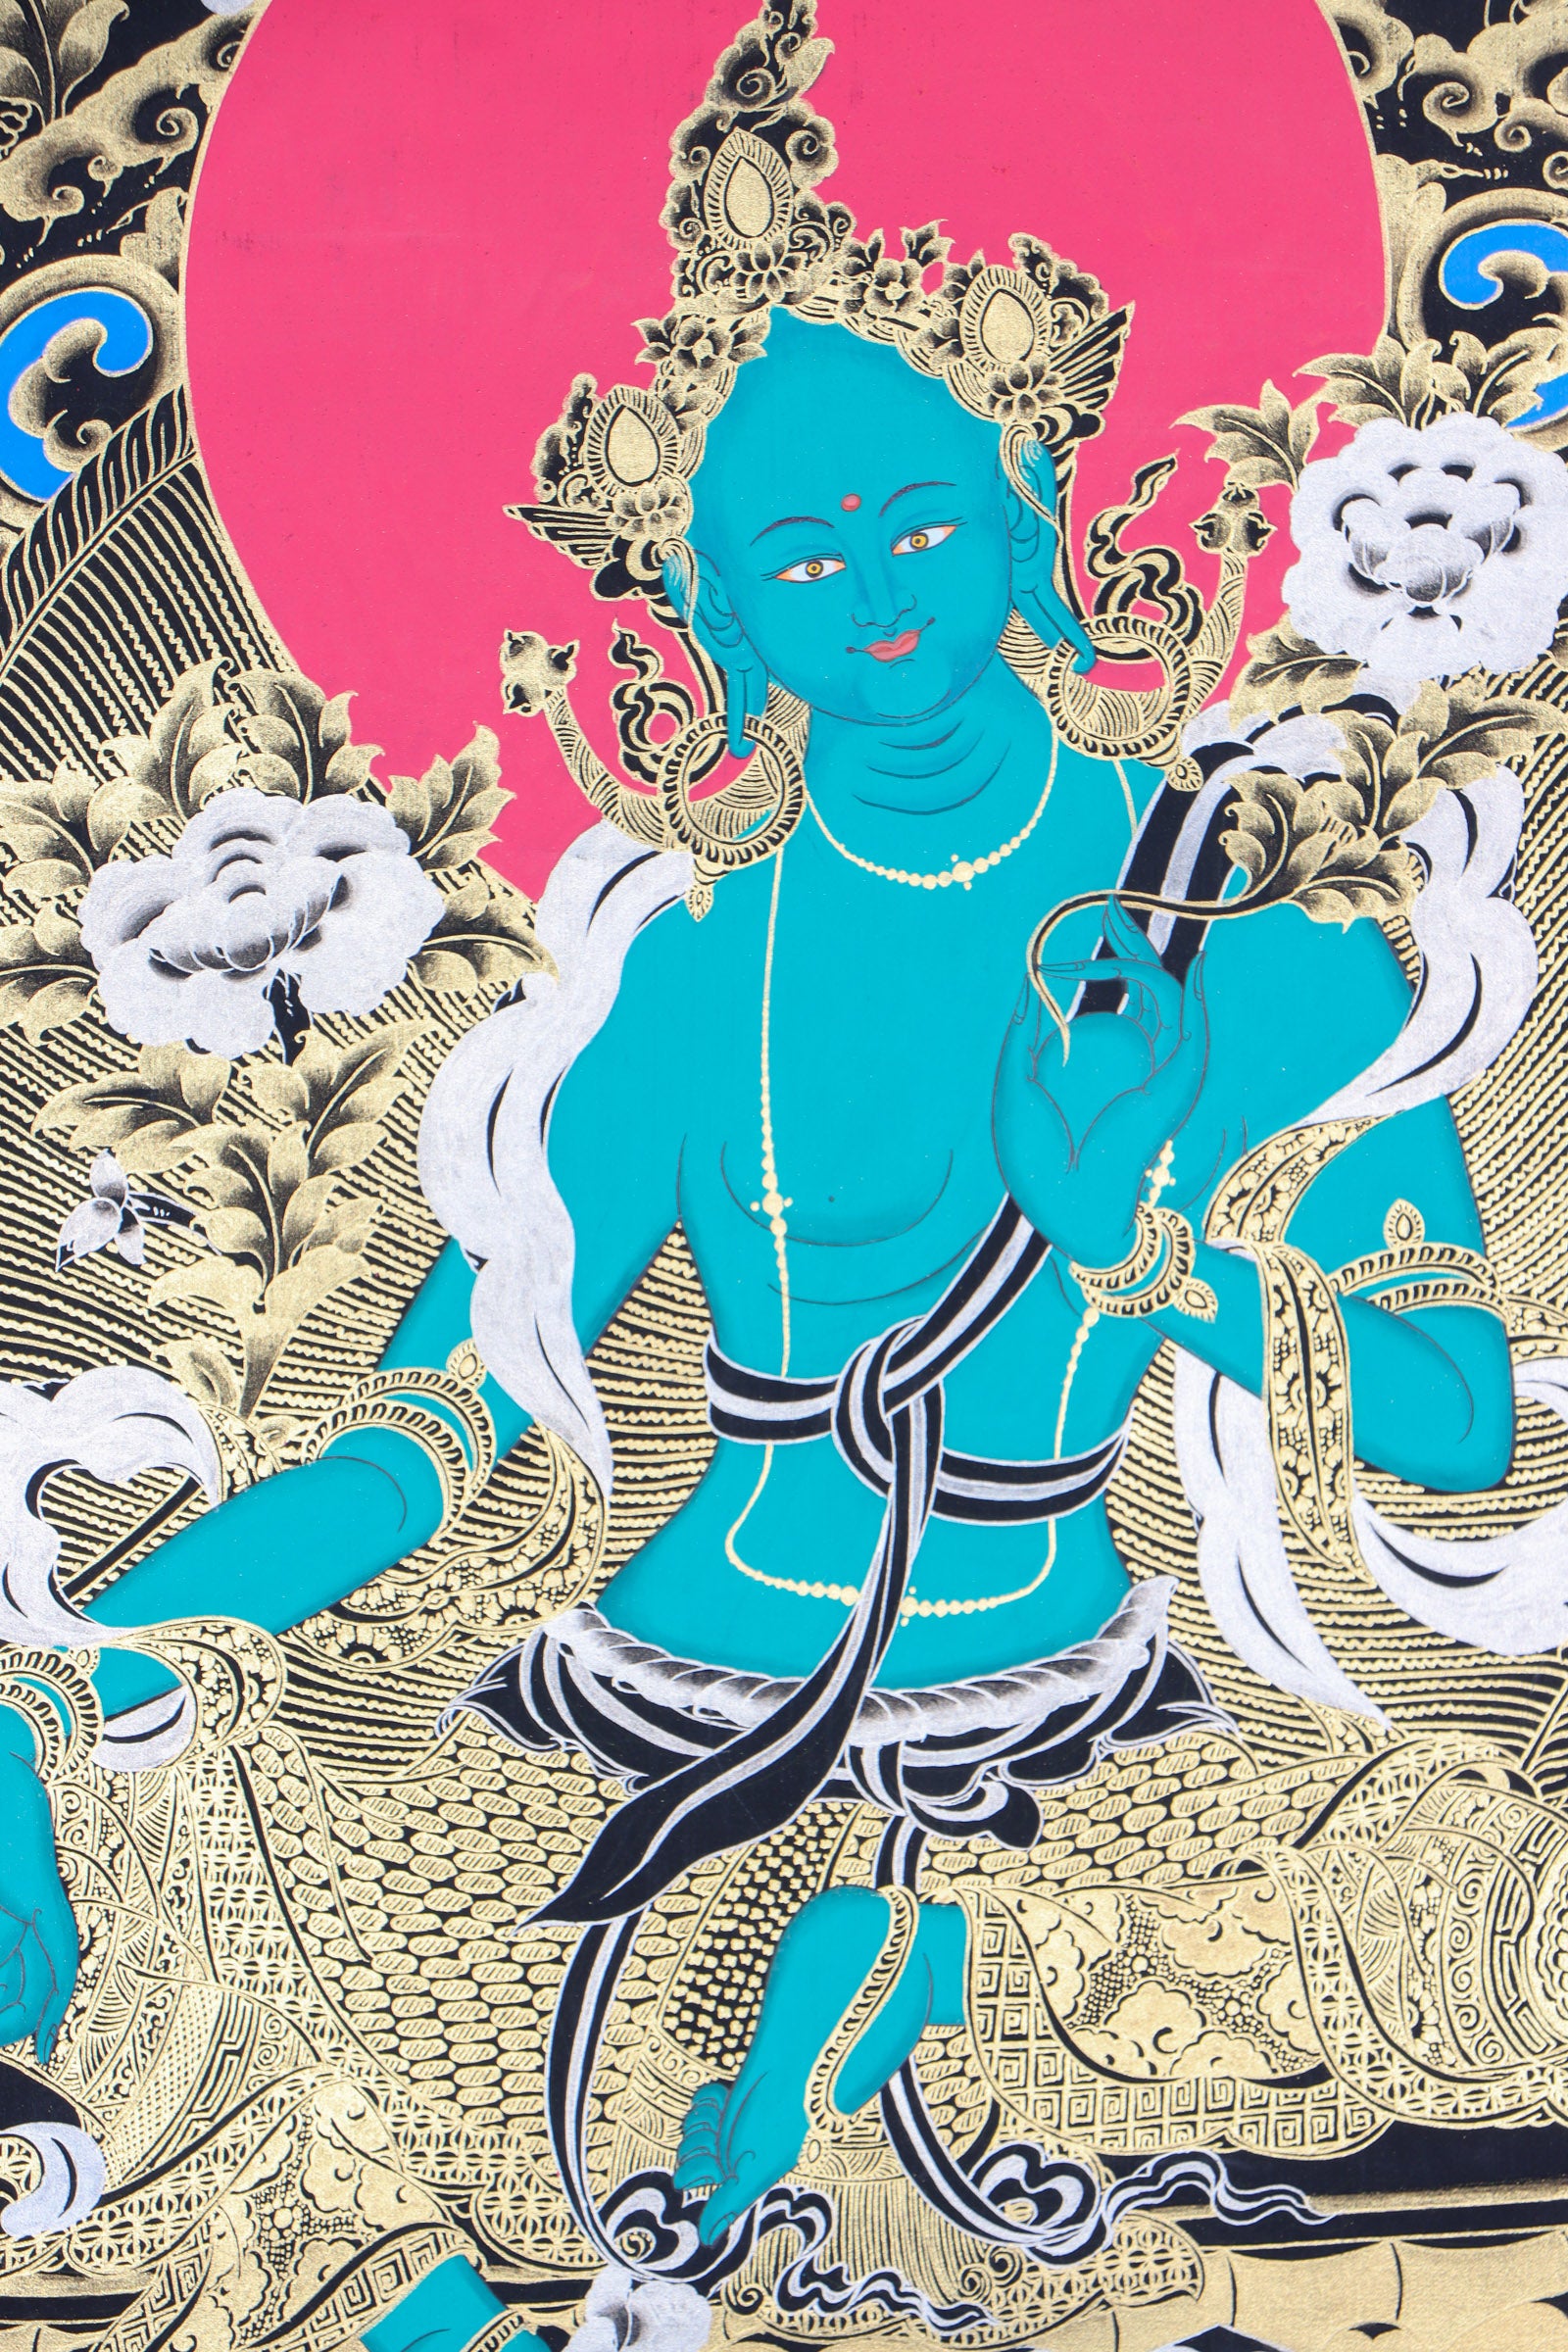 Green Tara Thangka Painting for peace, longevity, and affluence.